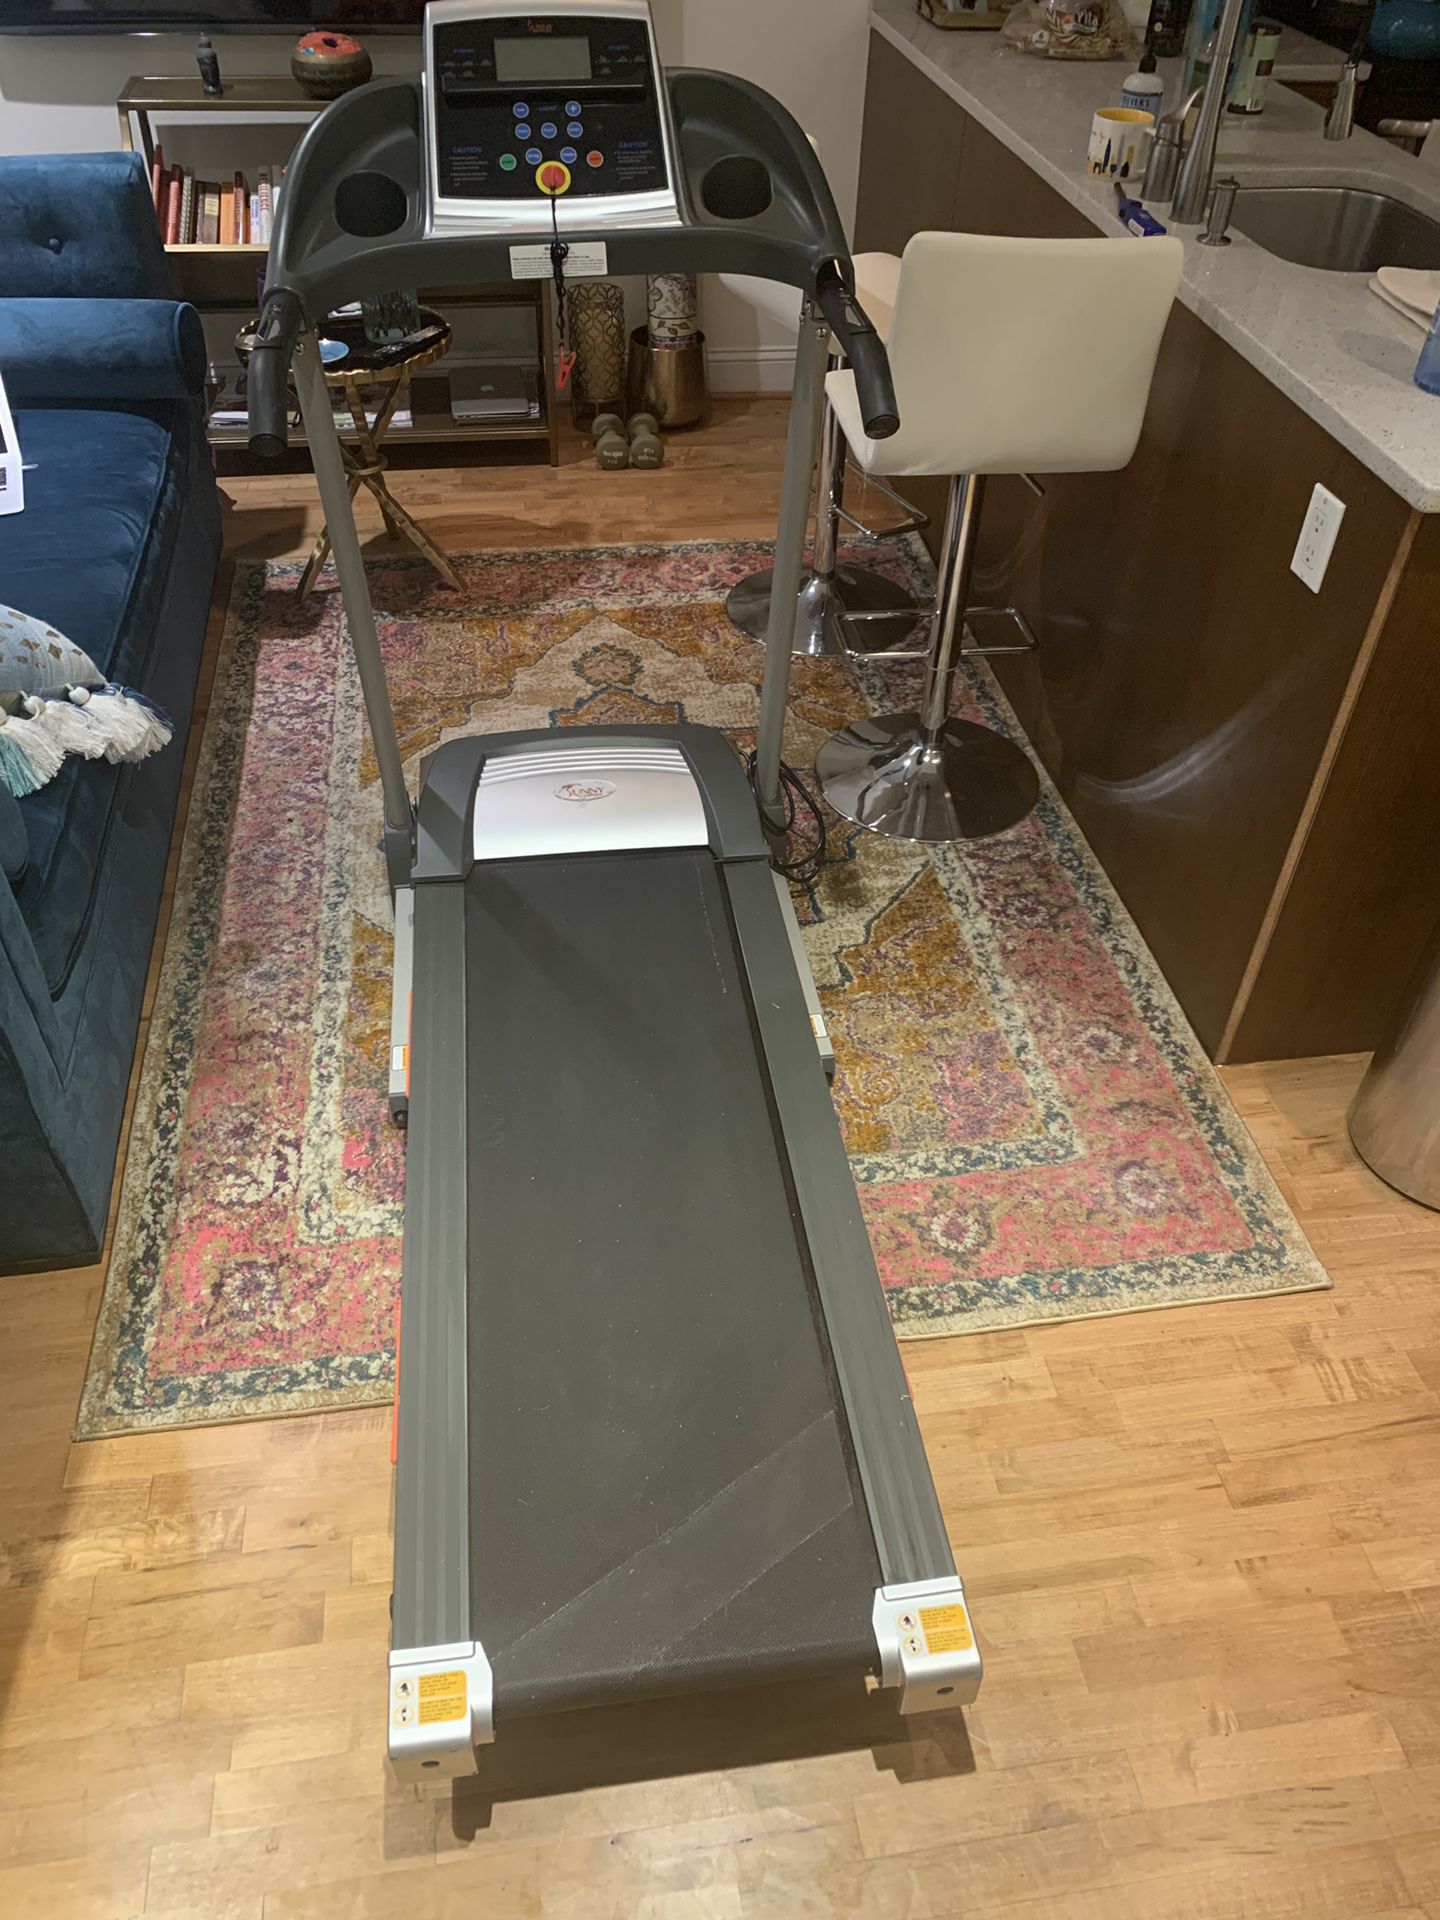 New barely used Sunny Health and Fitness folding treadmill